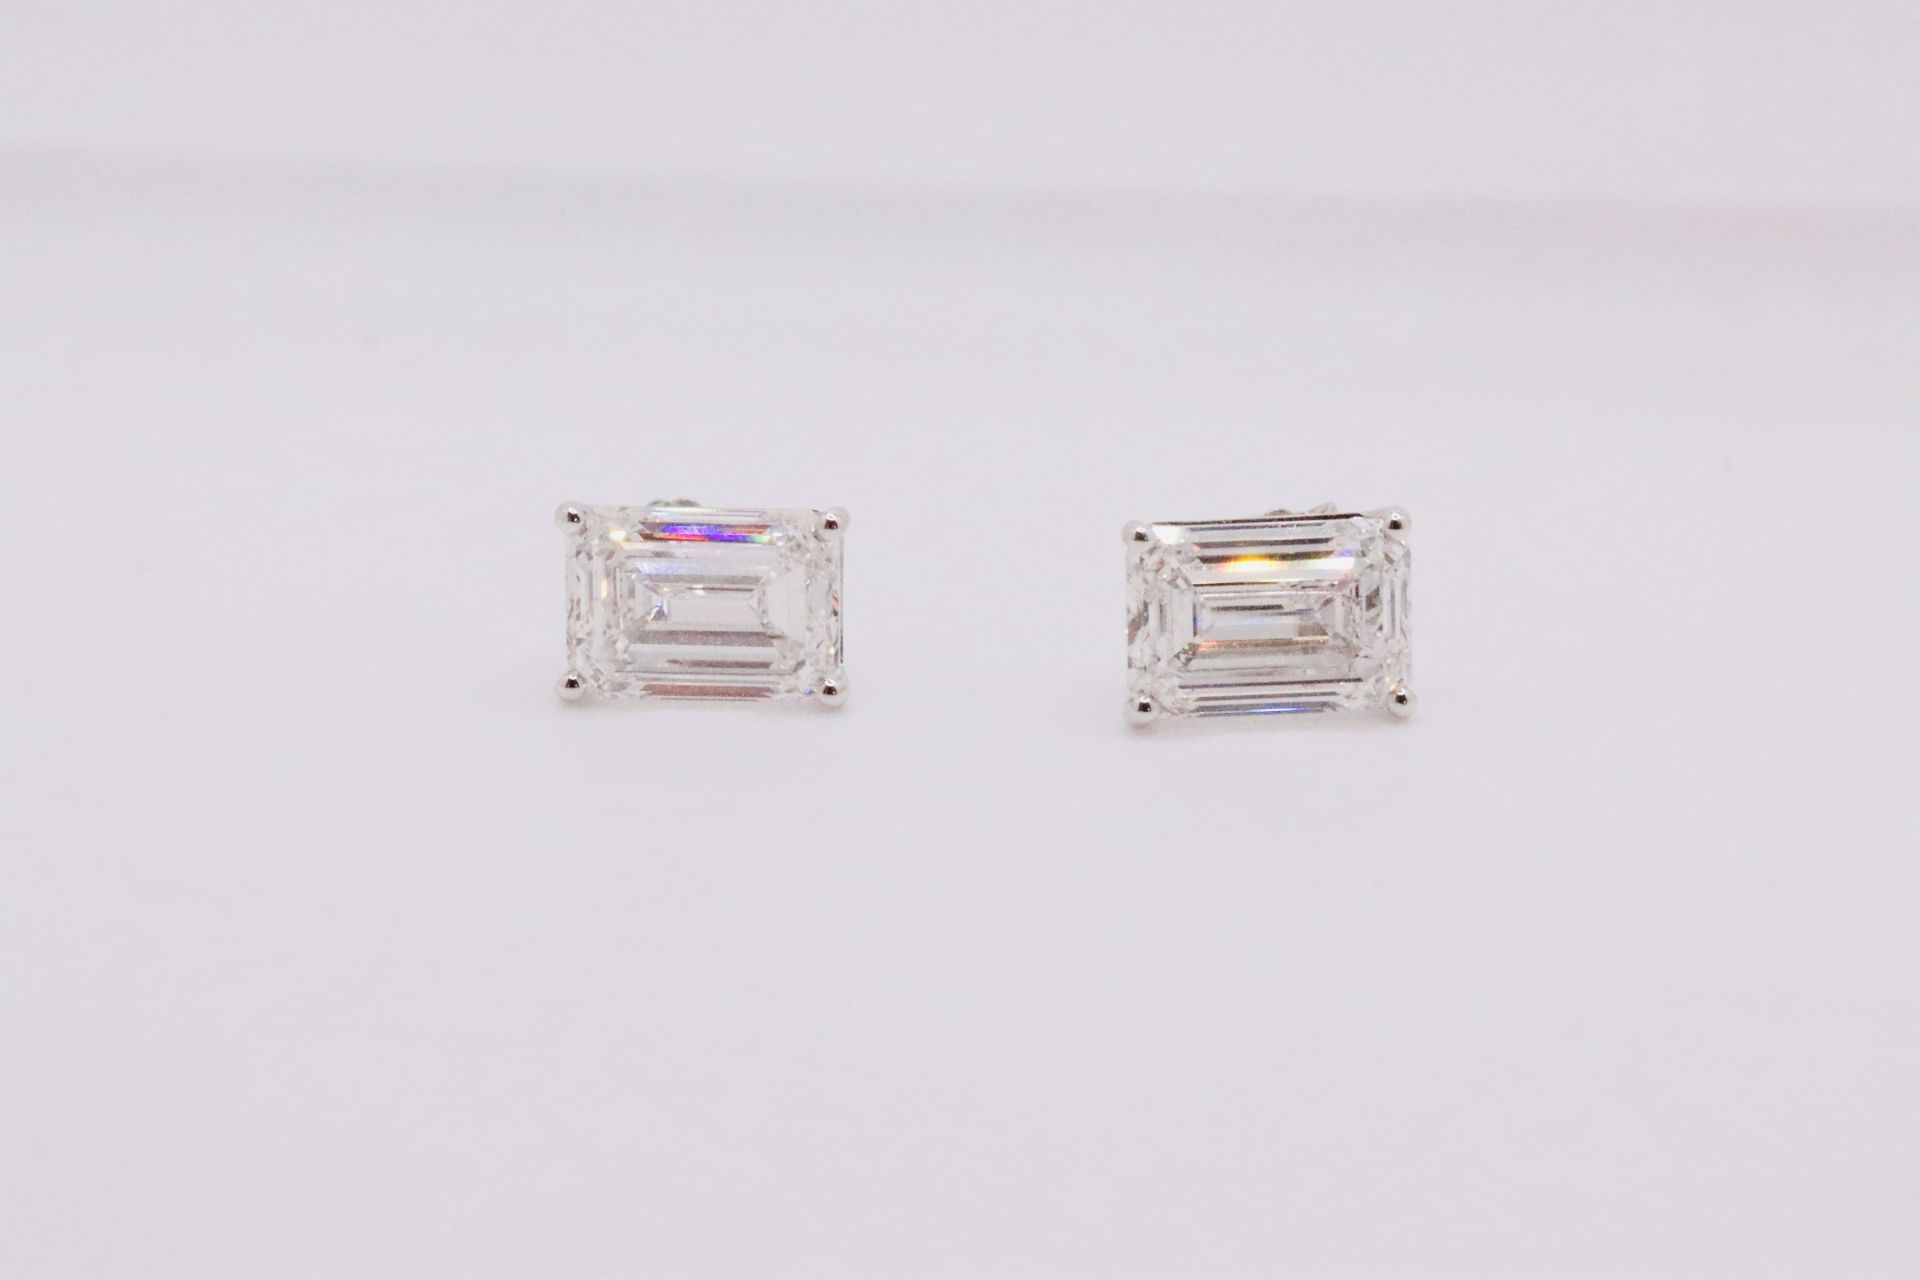 Emerald Cut 9.83 Carat 18kt White Gold Diamond Earrings E Colour VVS2 Clarity - IGI - Image 12 of 19